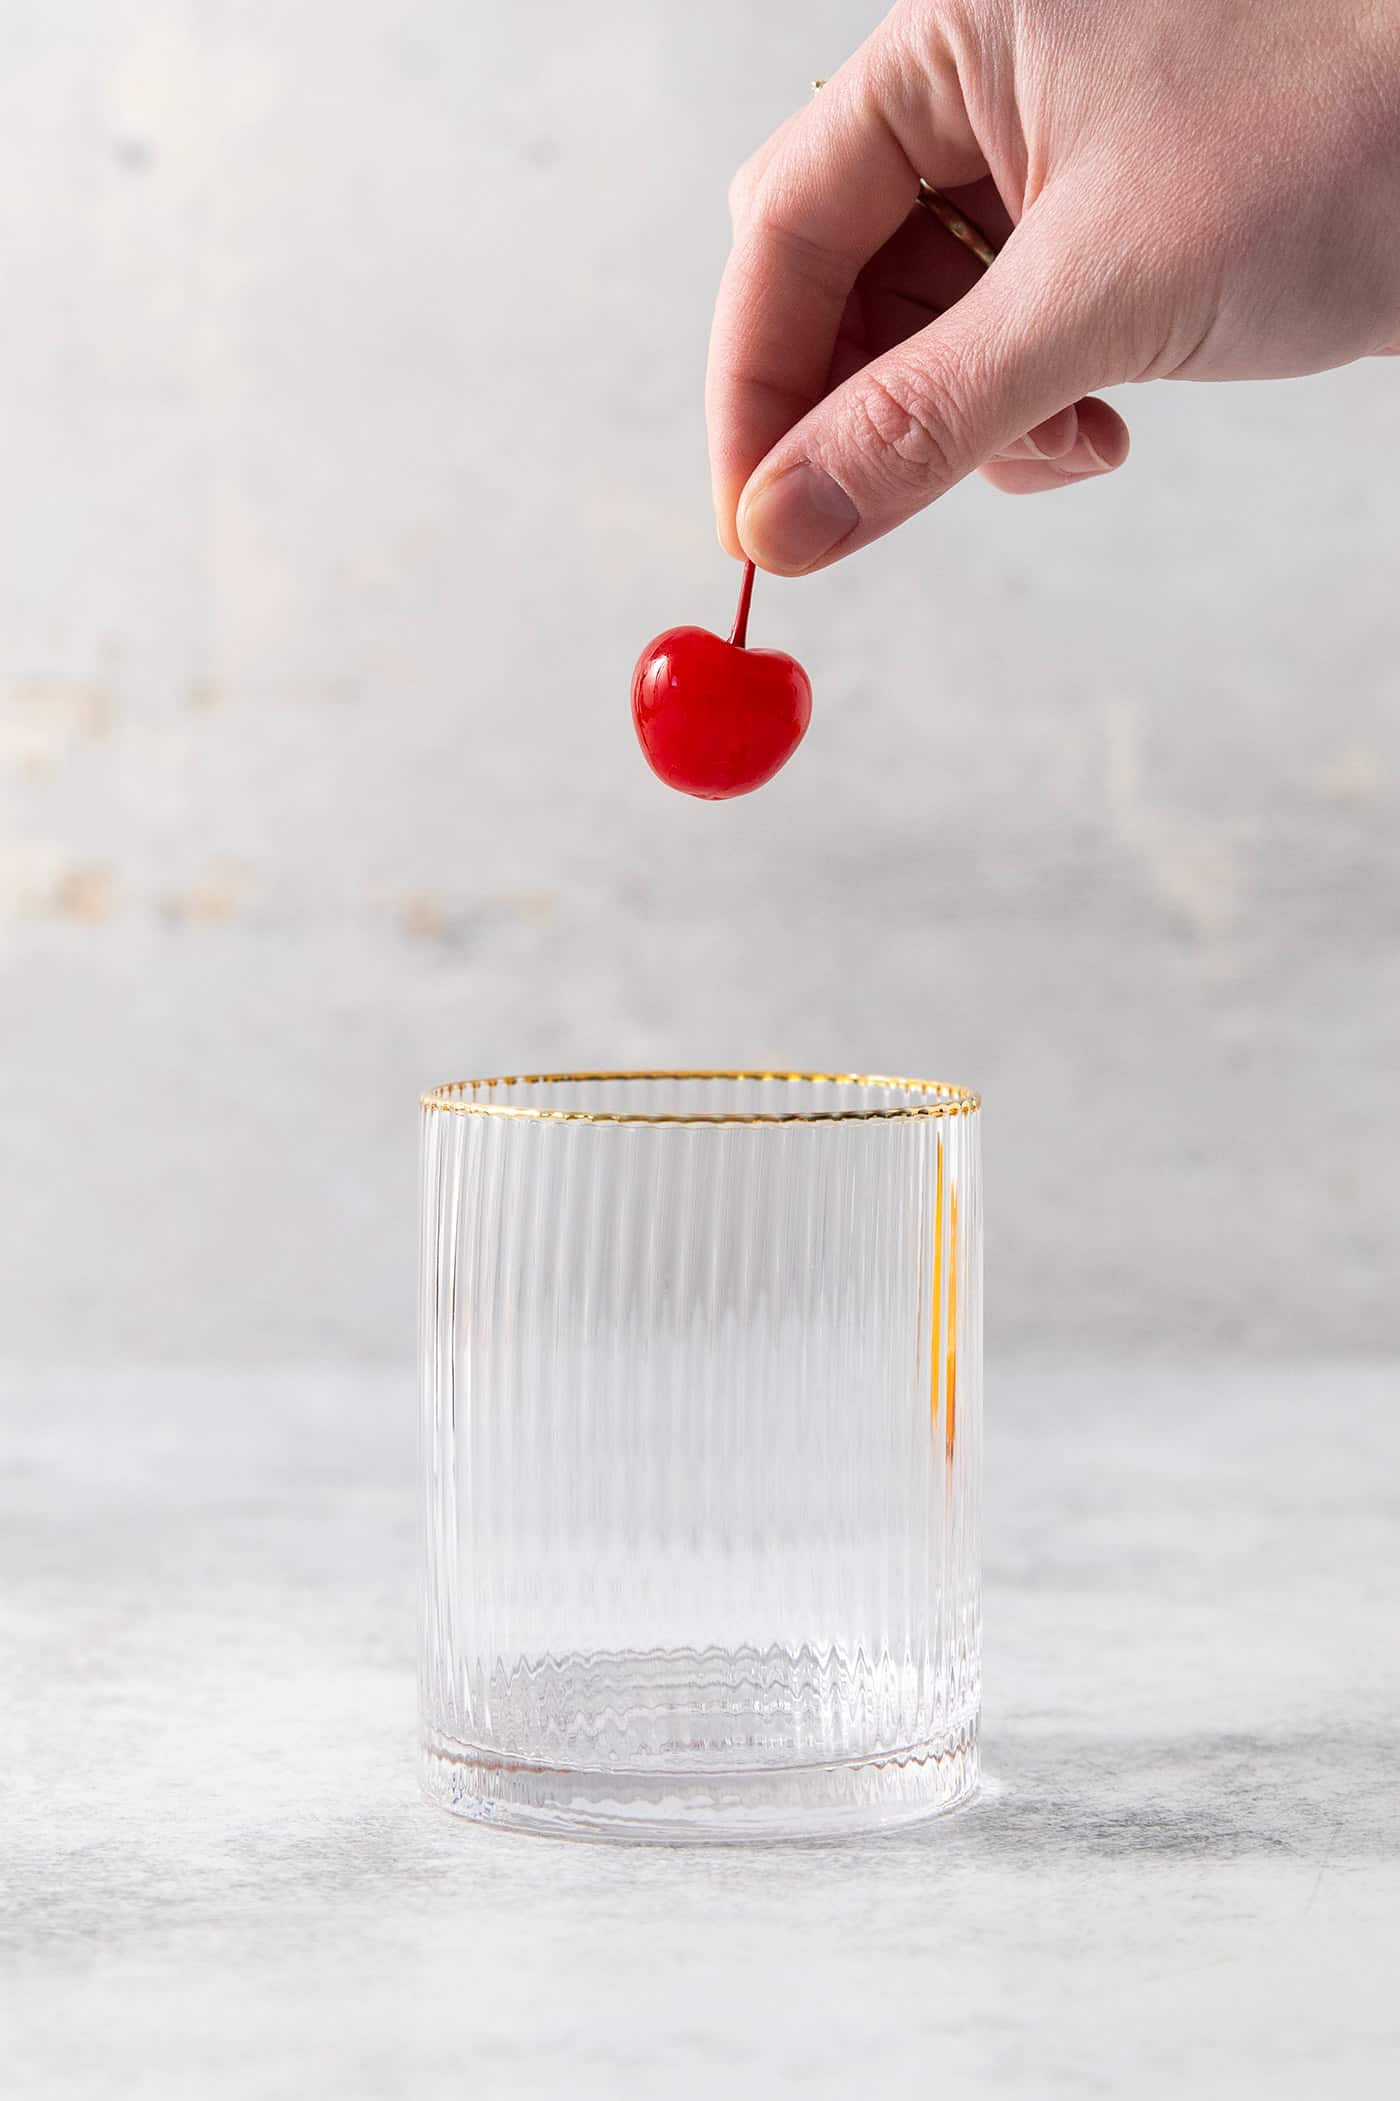 A hand adds a maraschino cherry to a glass.